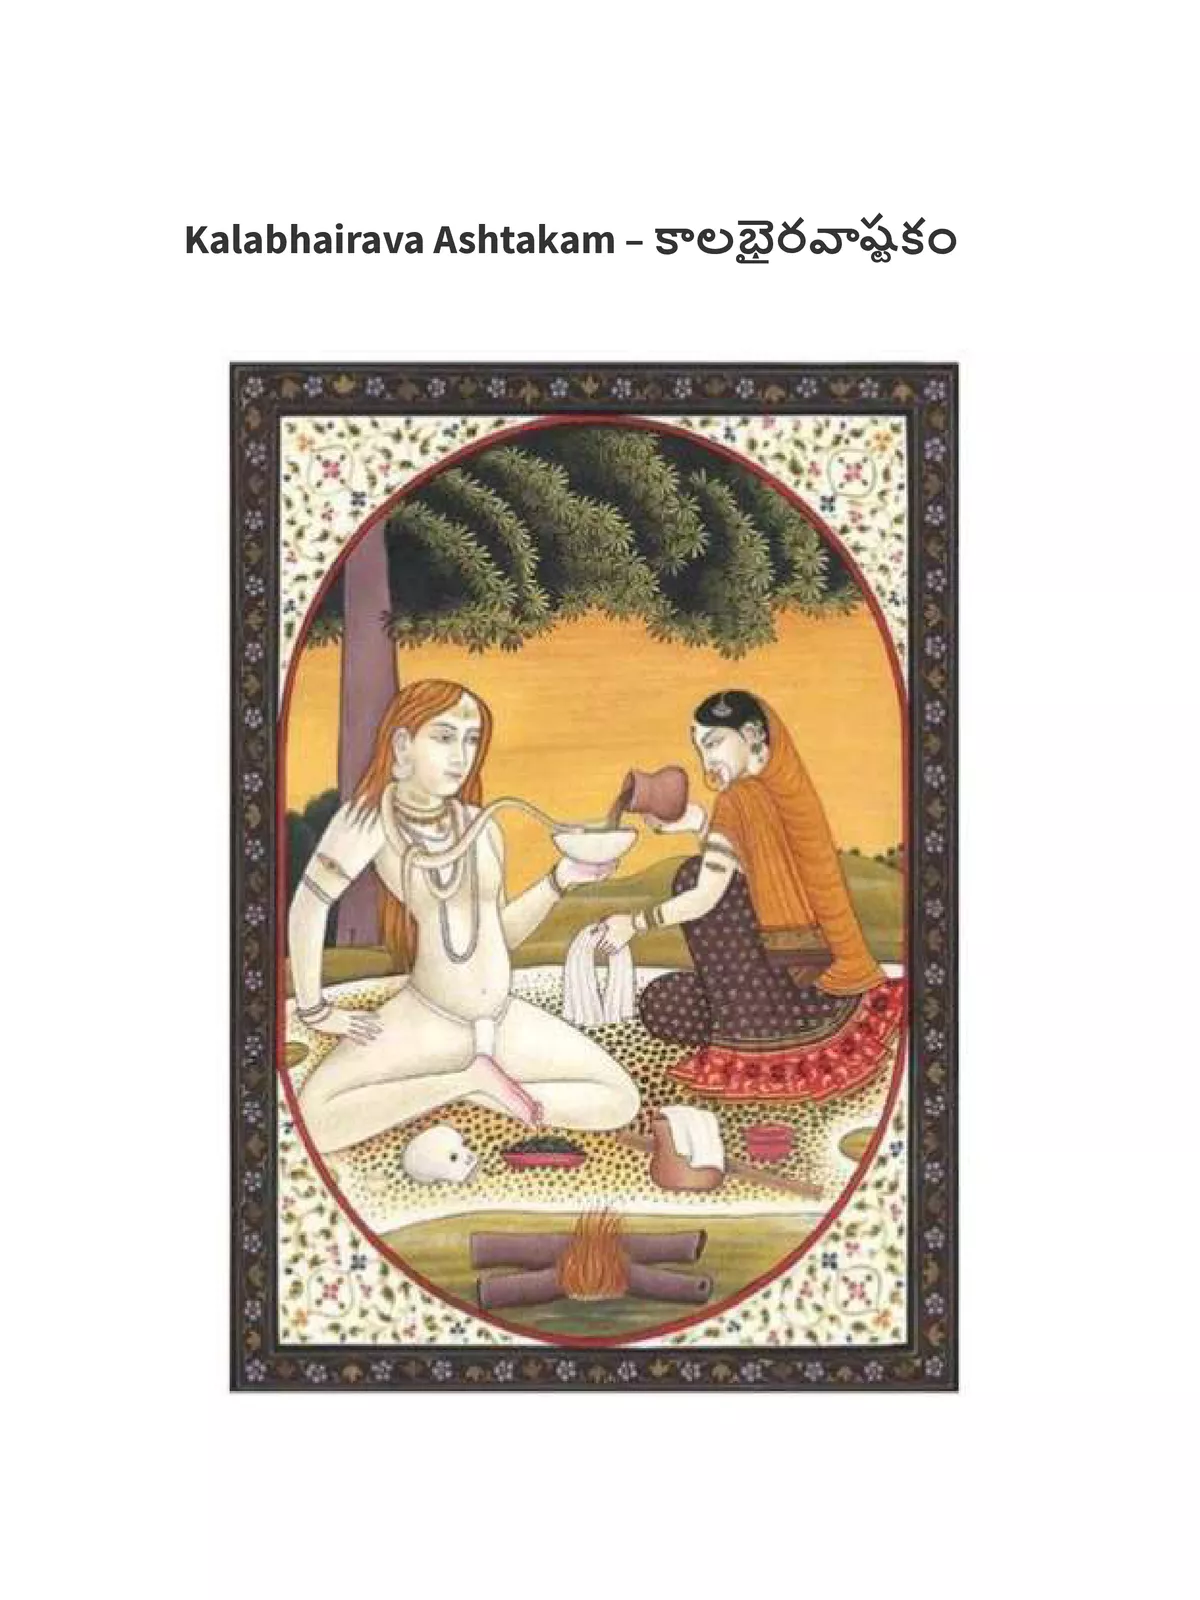 Kalabhairava Ashtakam Telugu ( కాలభైరవ అష్టకం తెలుగులో)